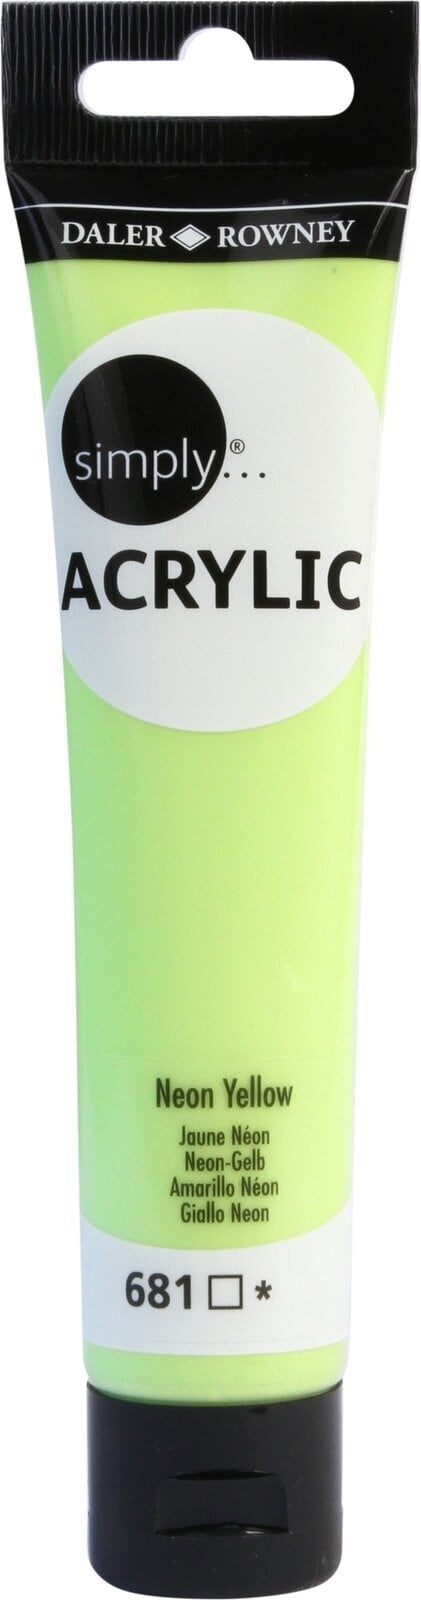 Akrylmaling Daler Rowney Simply Akrylmaling Neon Yellow 75 ml 1 stk.